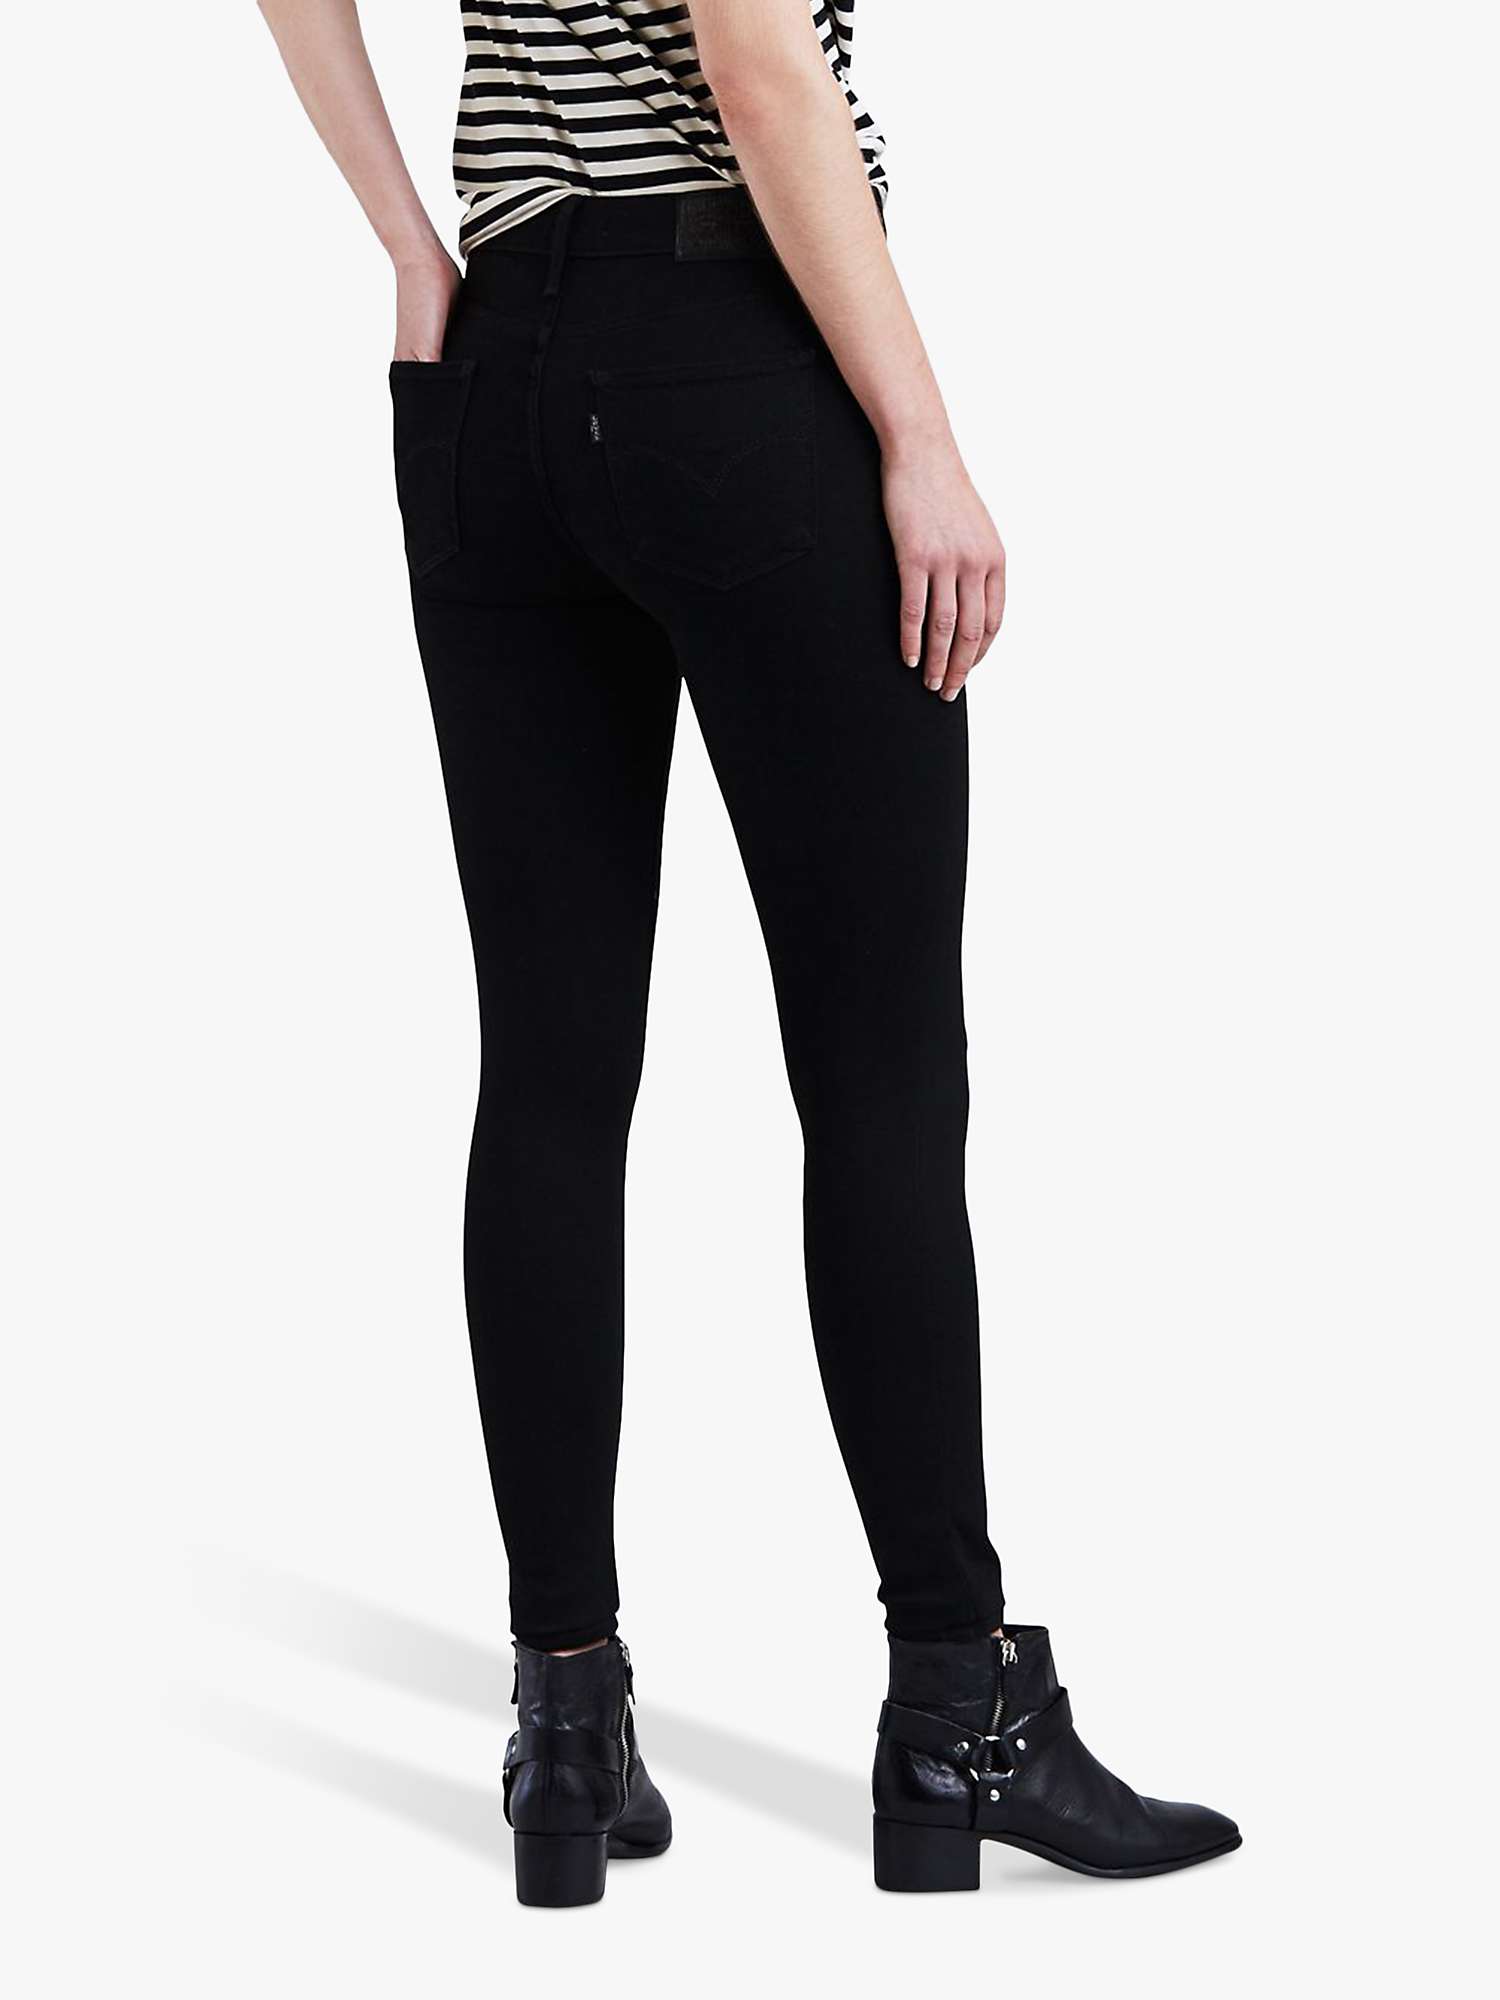 Buy Levi's 720 High Rise Super Skinny Jeans, Celestial Black Online at johnlewis.com